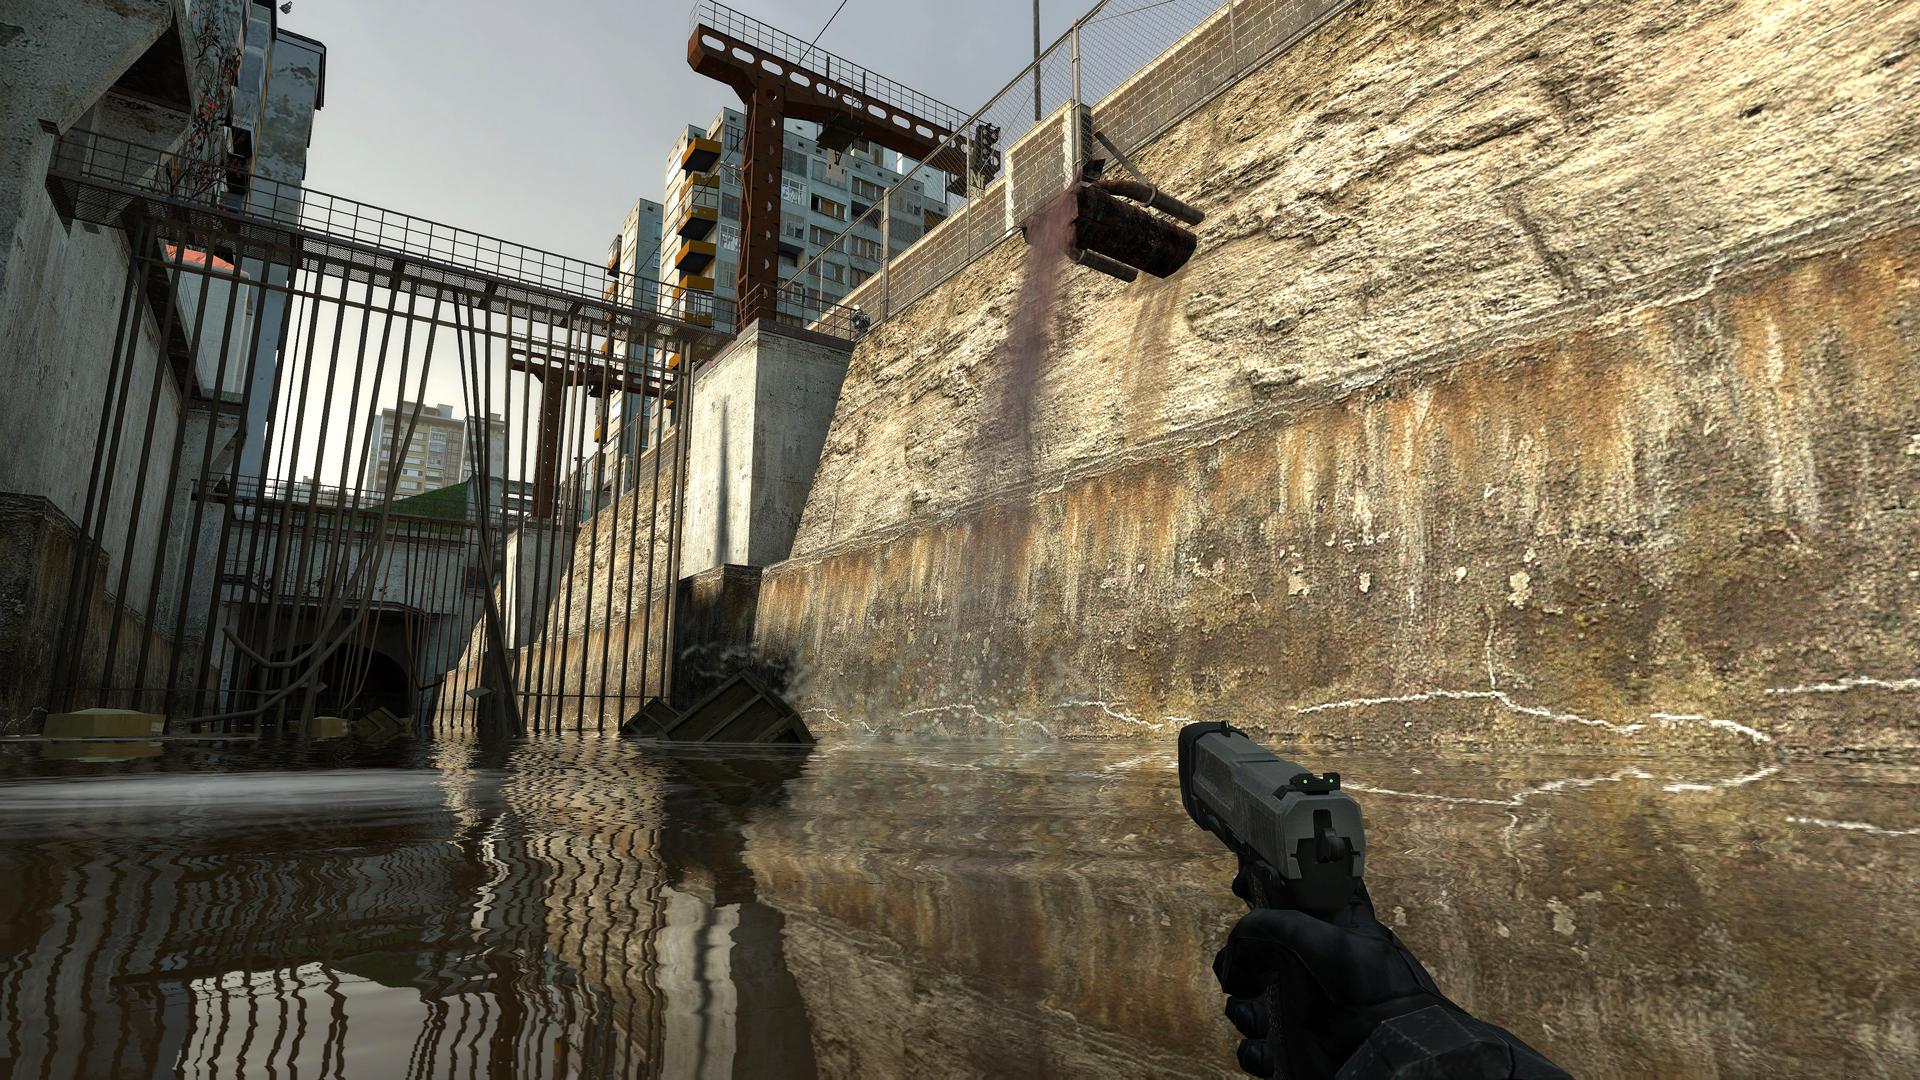 Screenshot №6 from game Half-Life 2: Update